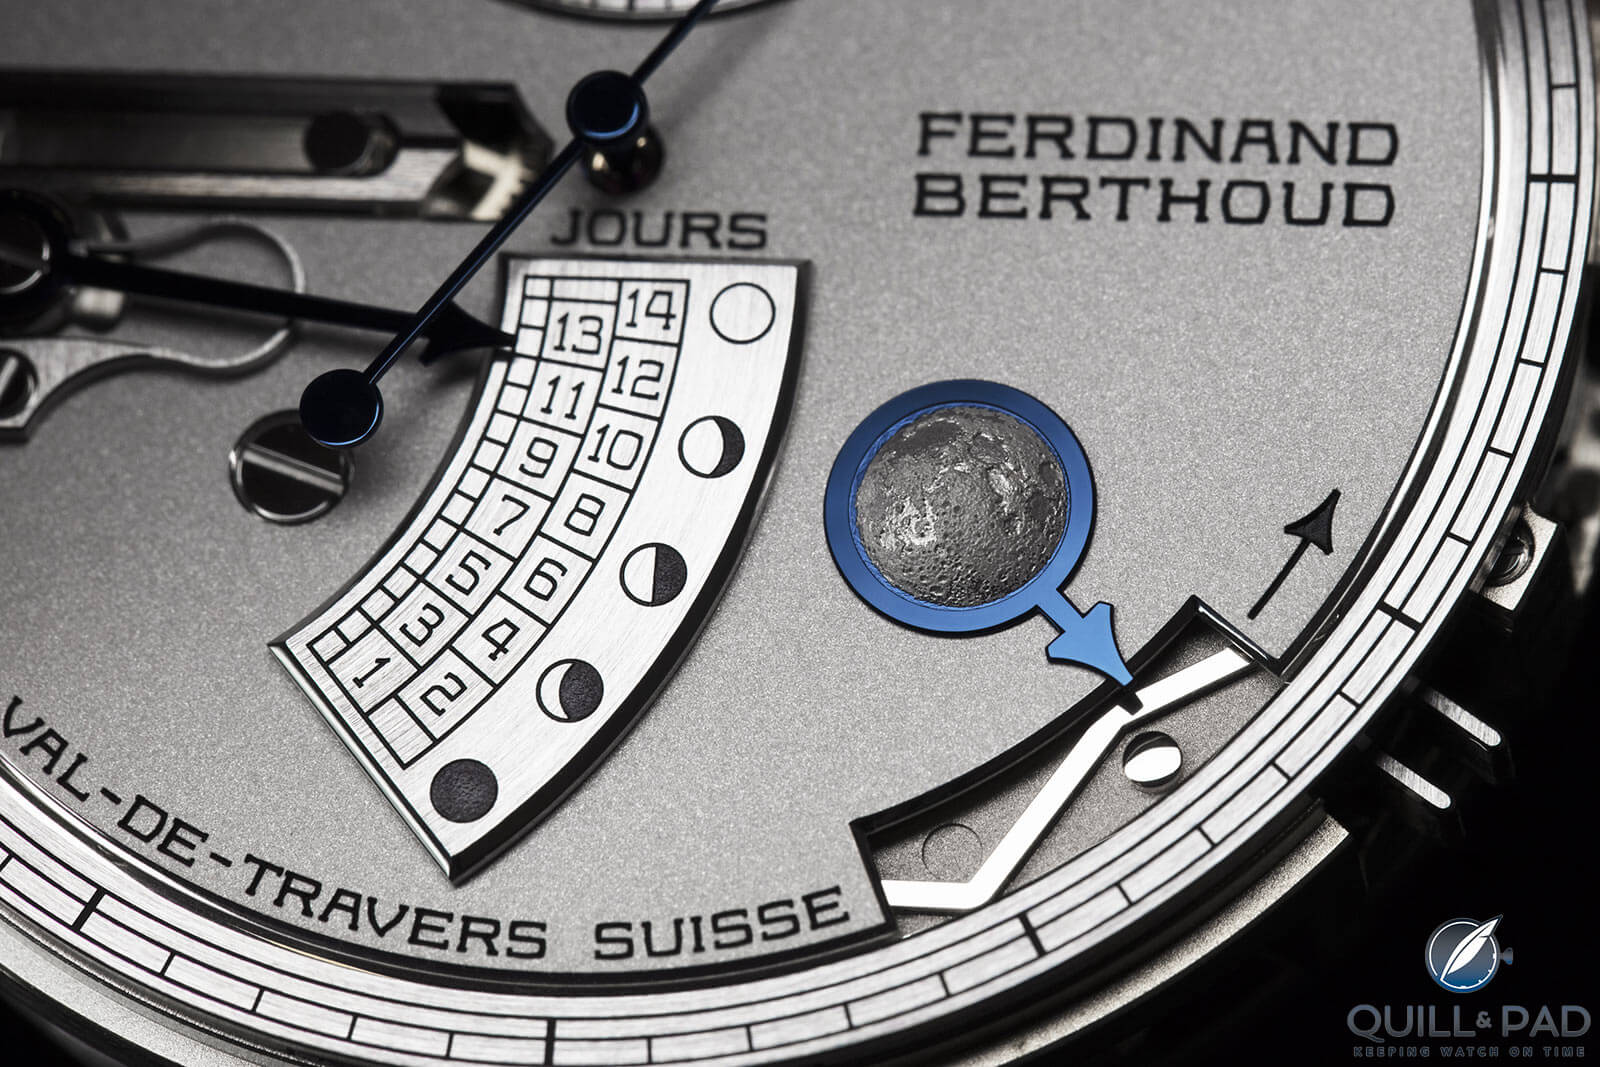 Ferdinand Berthoud FB 1L 'Near side of the moon' display